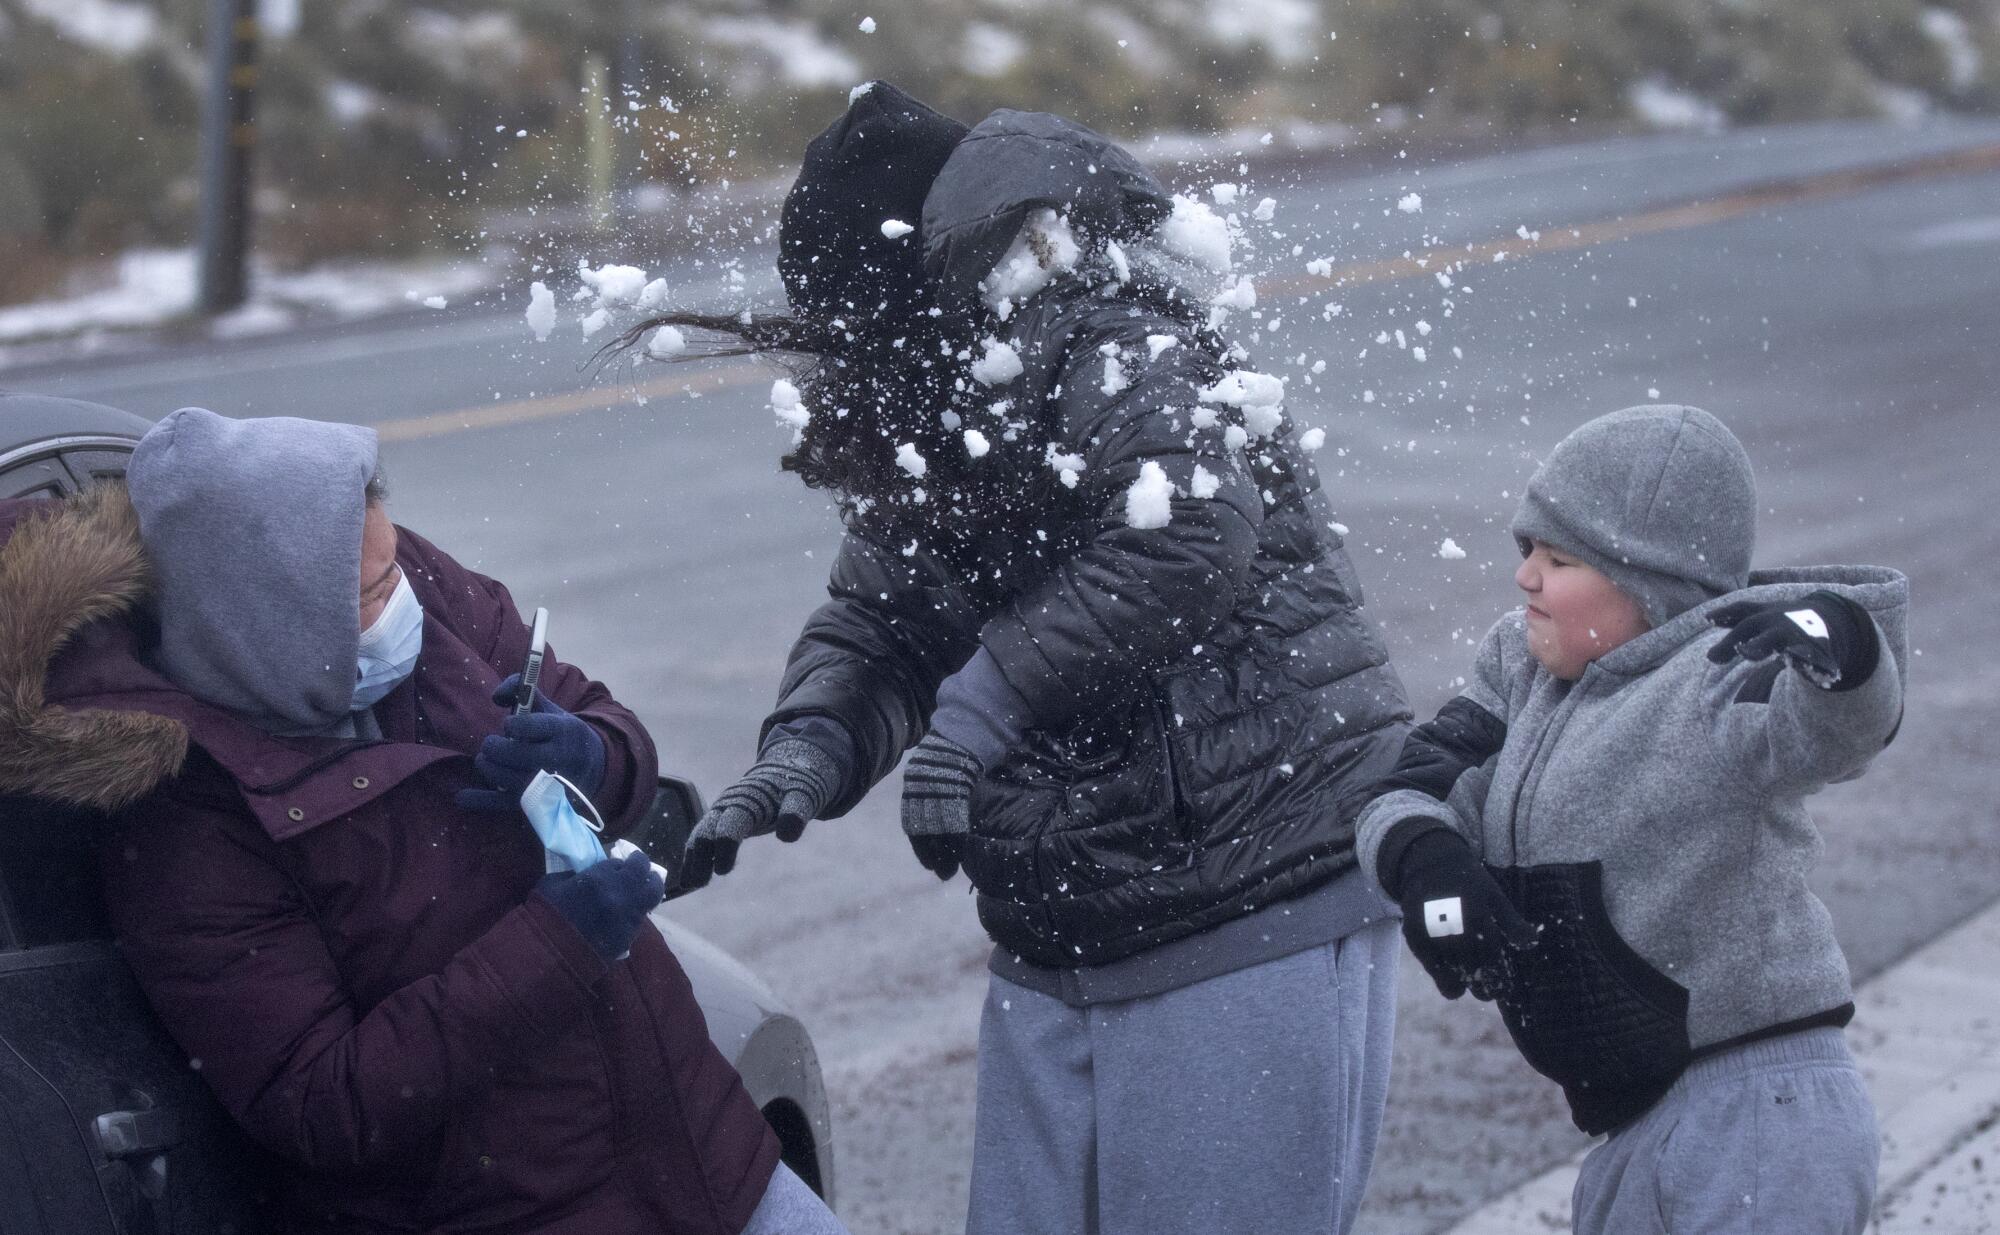 Sebastian Castillo, 8, right, hits his sister, Marilyn Castillo, with a snowball as mother Maria Martinez looks on